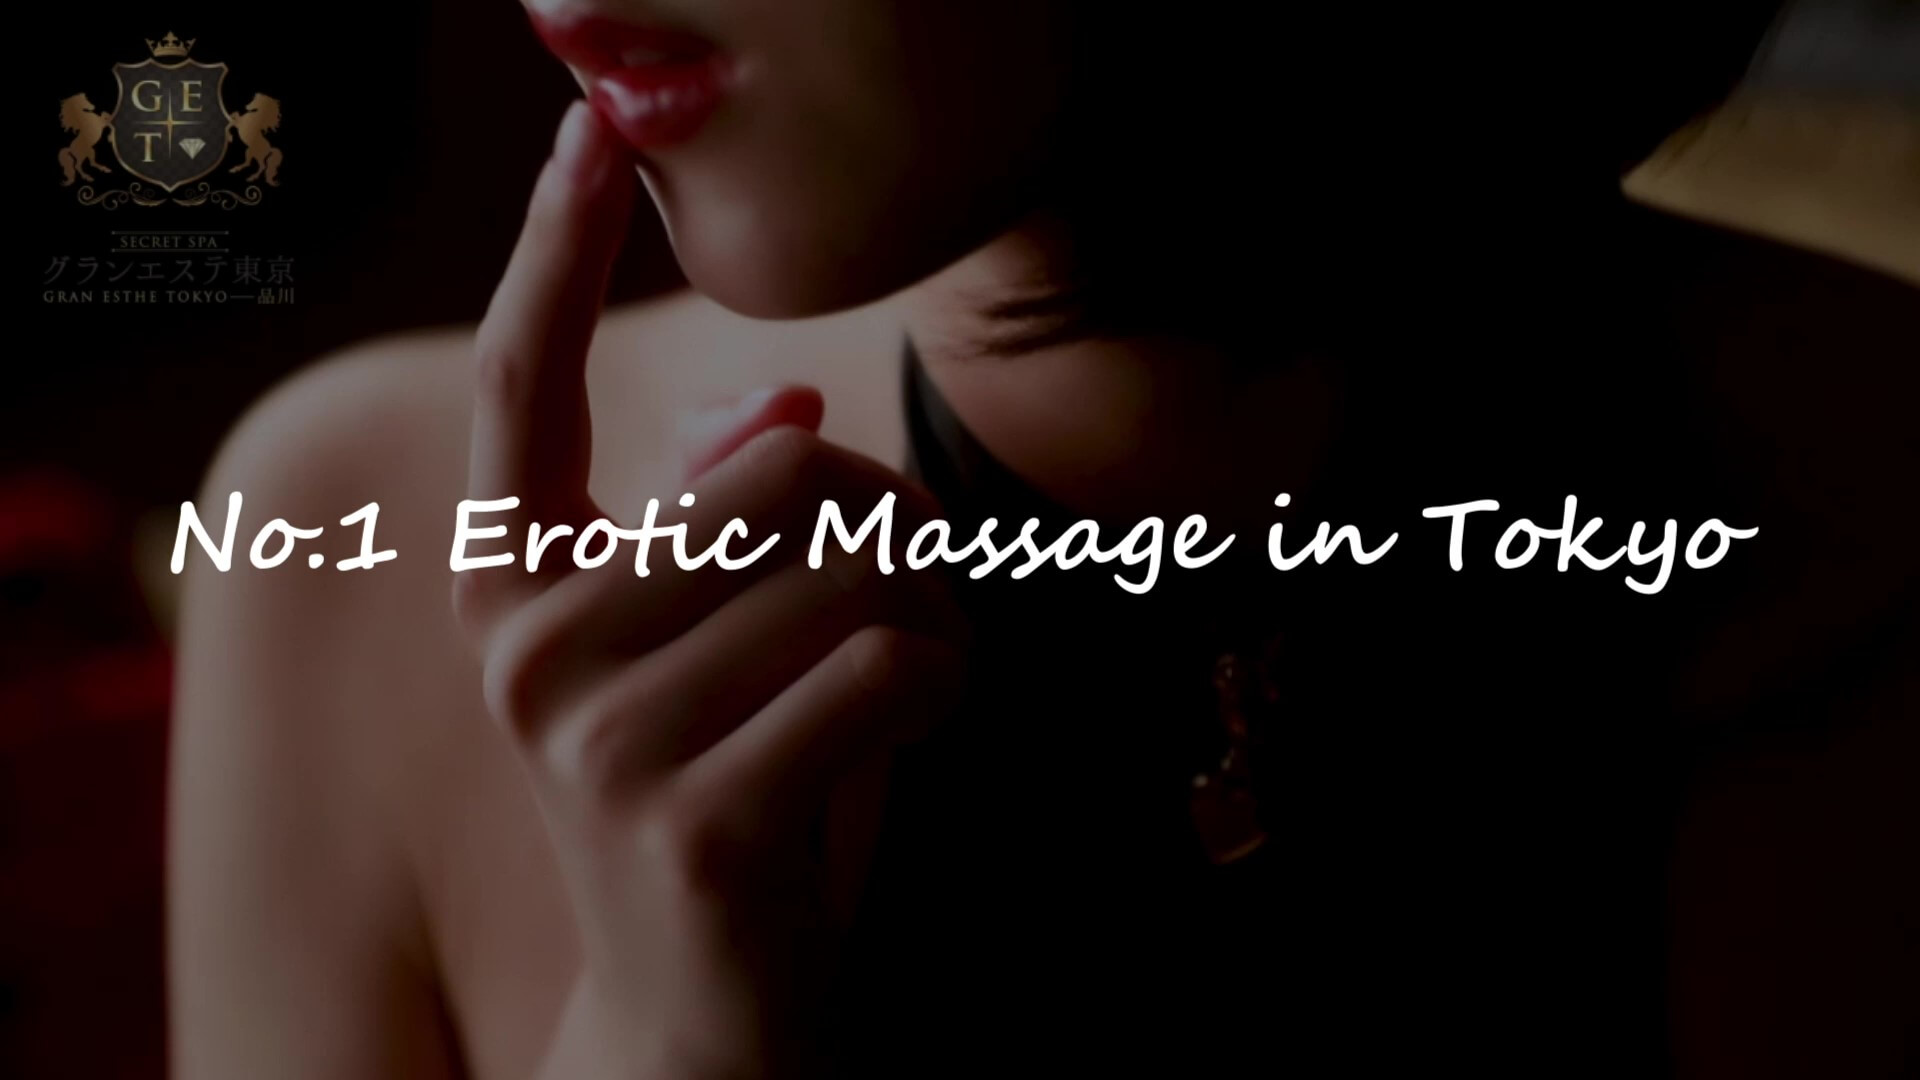 Gran Erotic Massage Tokyo Japanese Erotic, Nuru, Happyending Massage Services